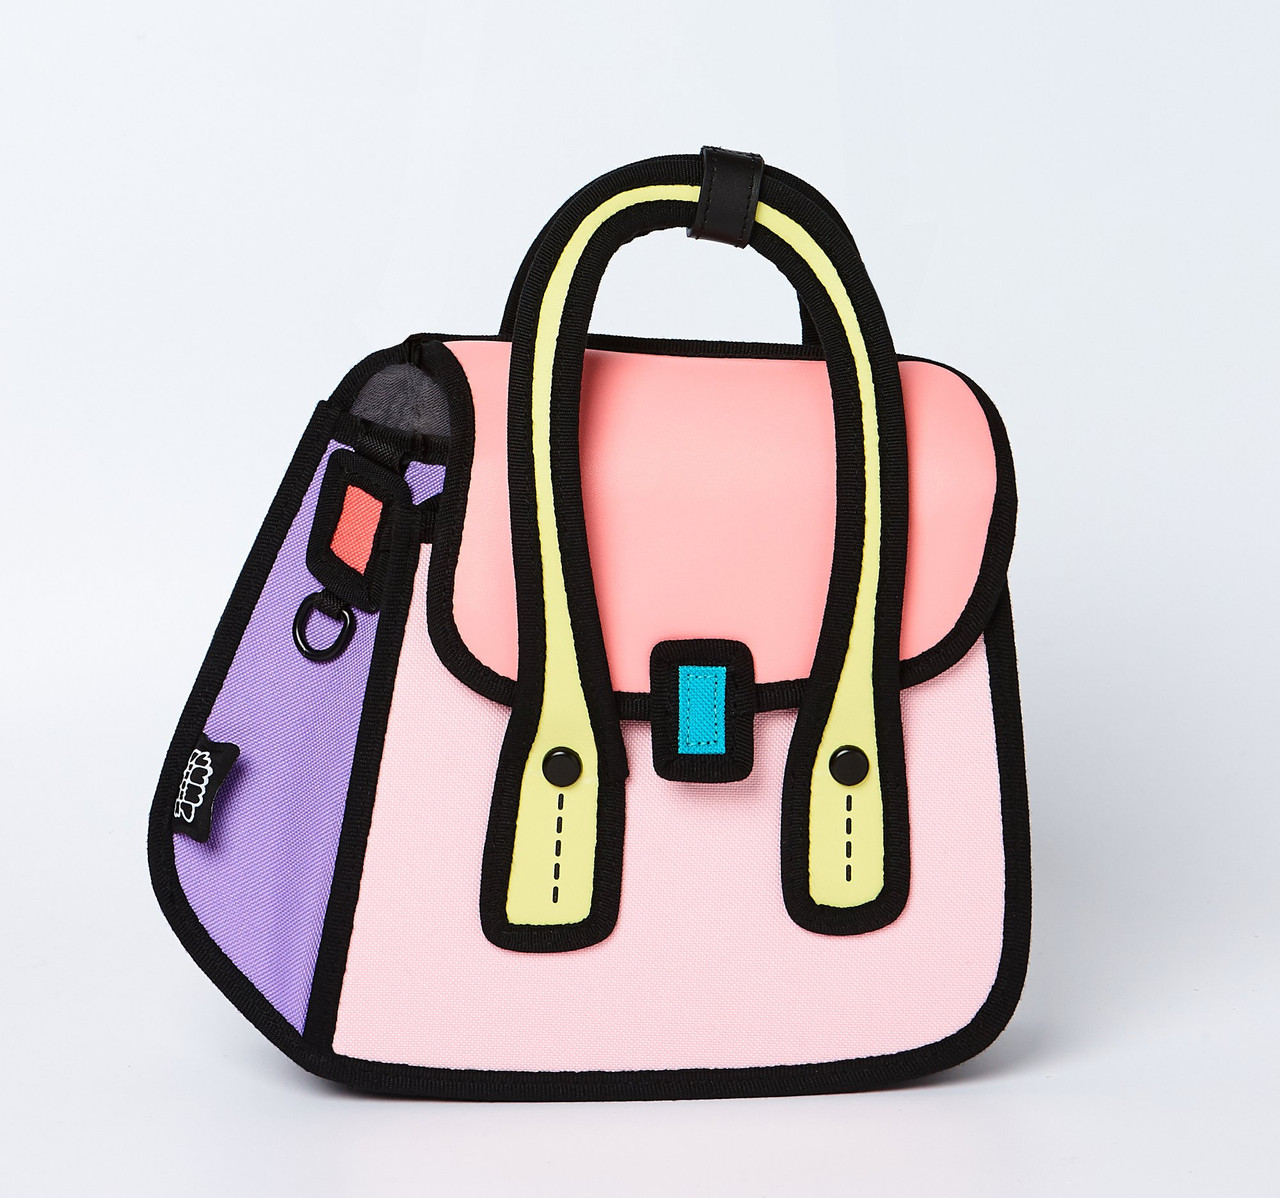 Female hand with a handbag ladies elegant bag Vector Image